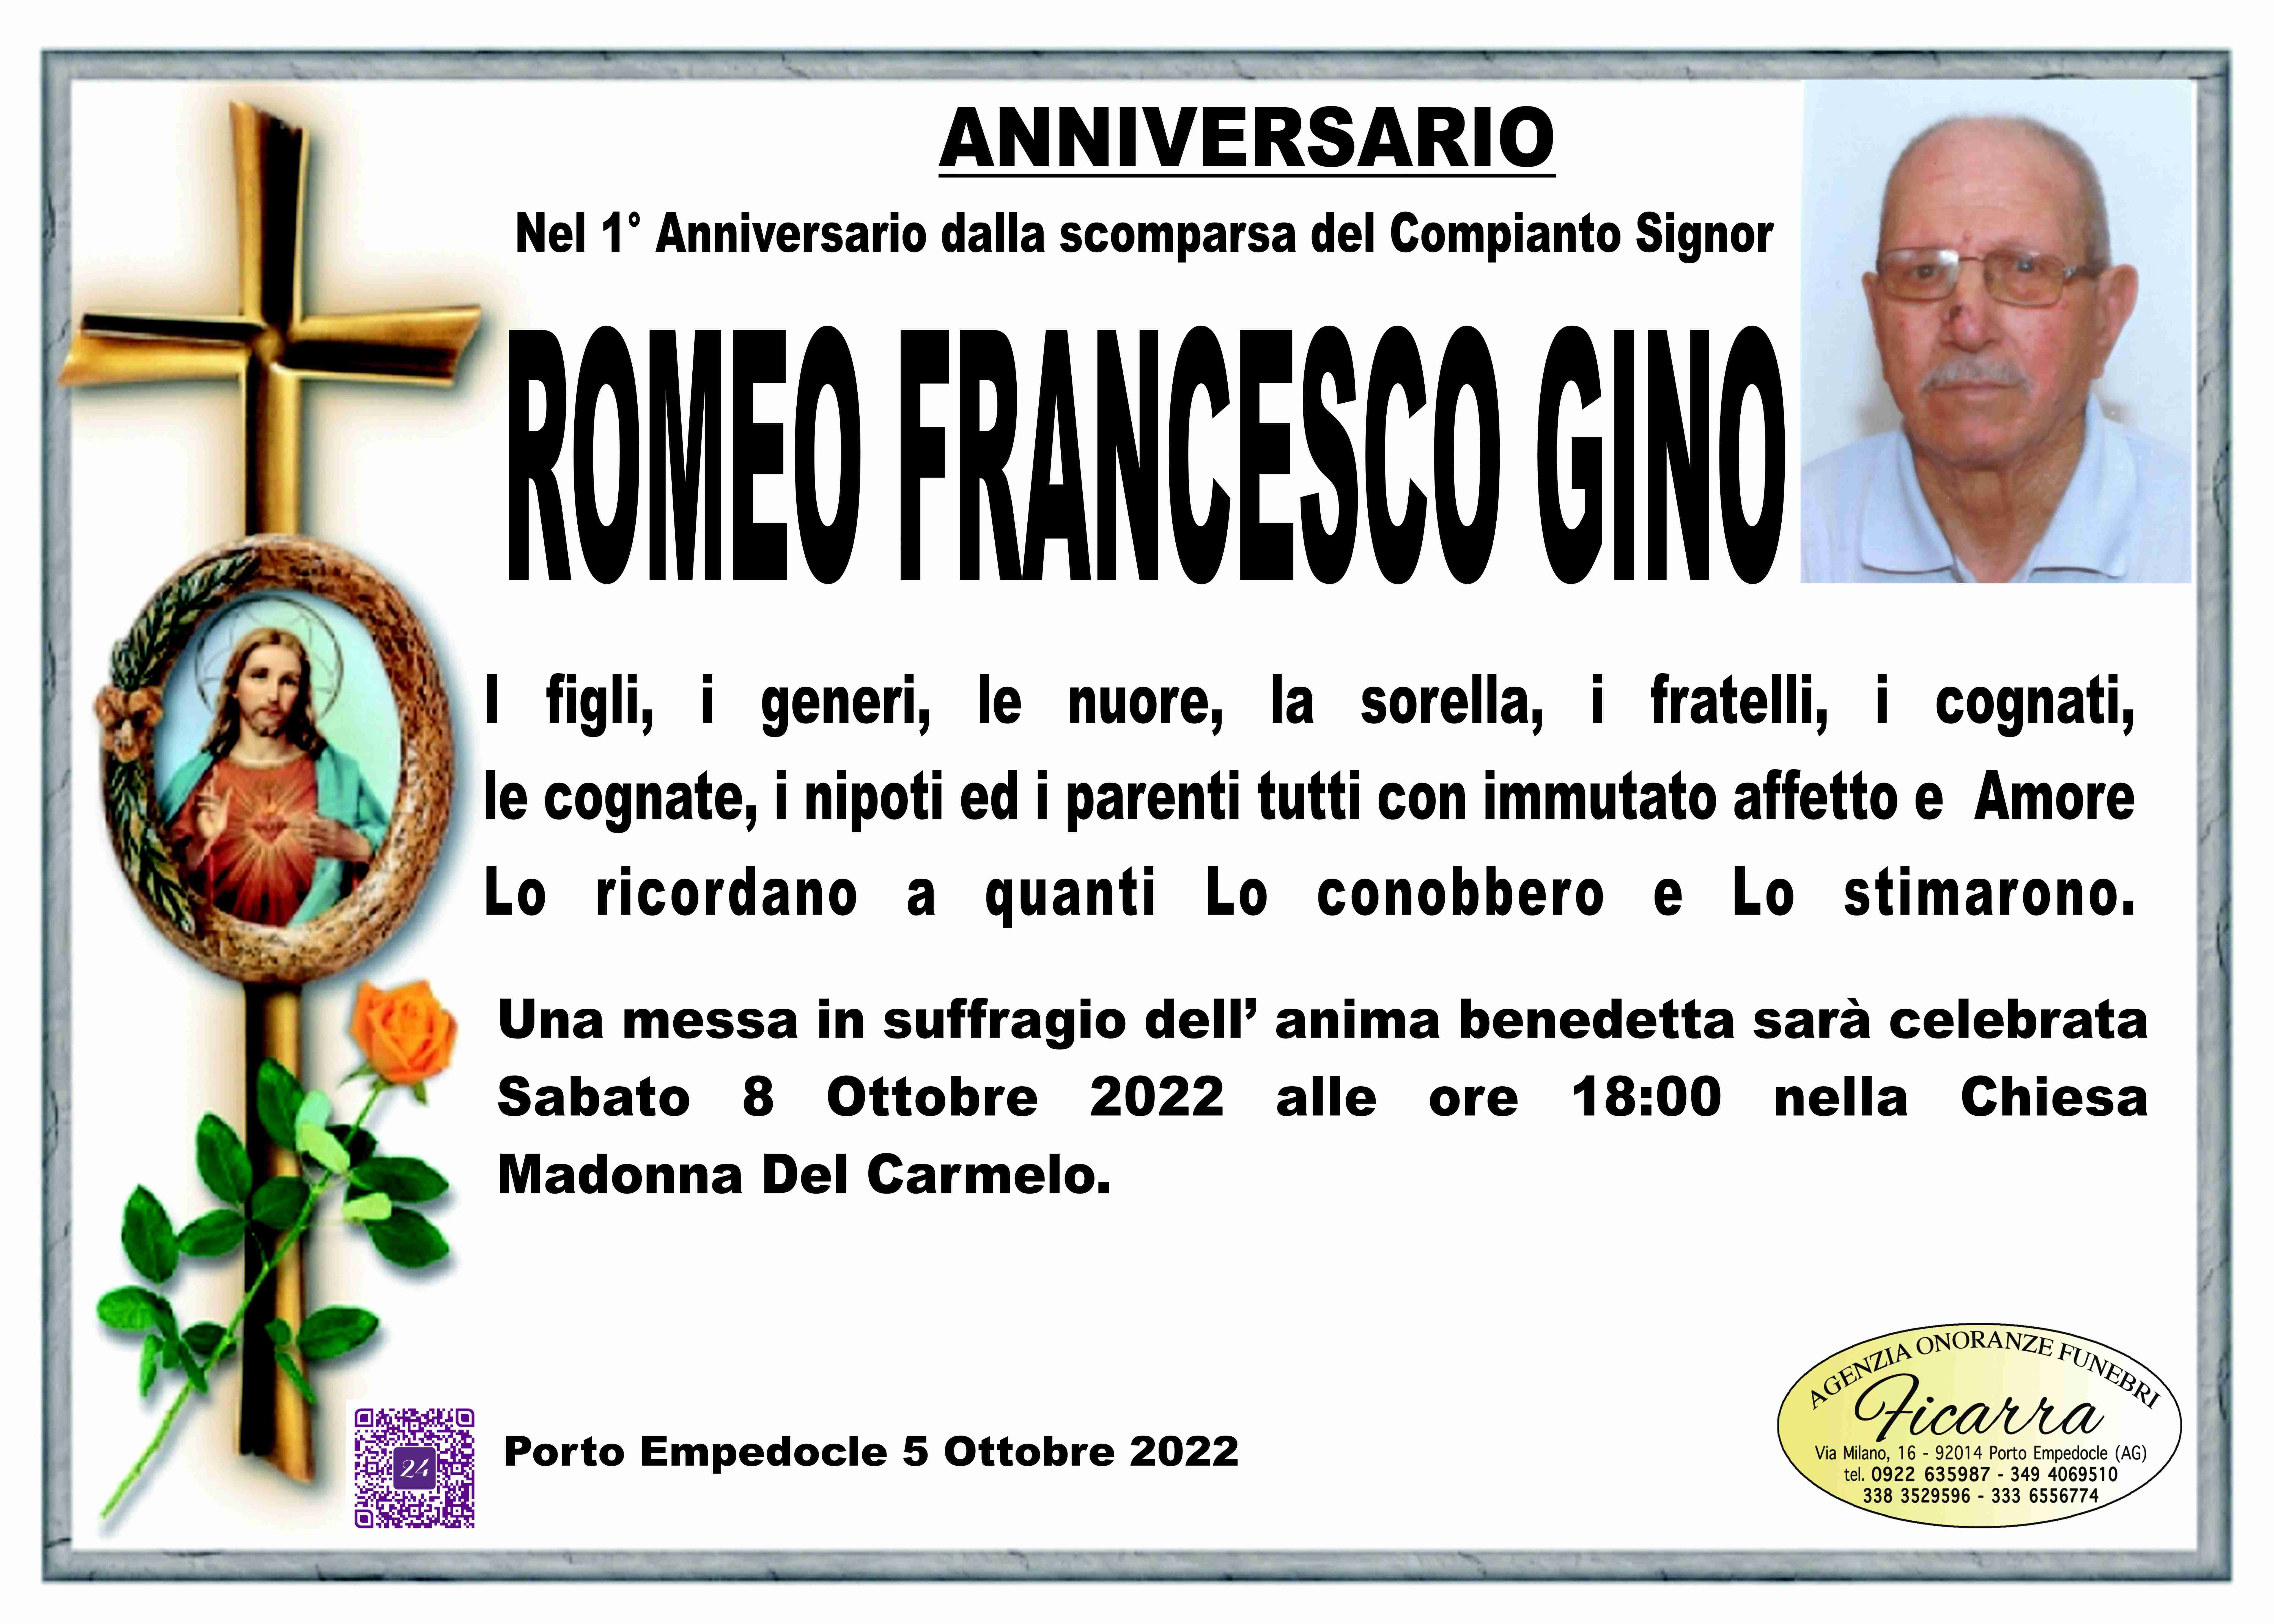 Francesco Romeo